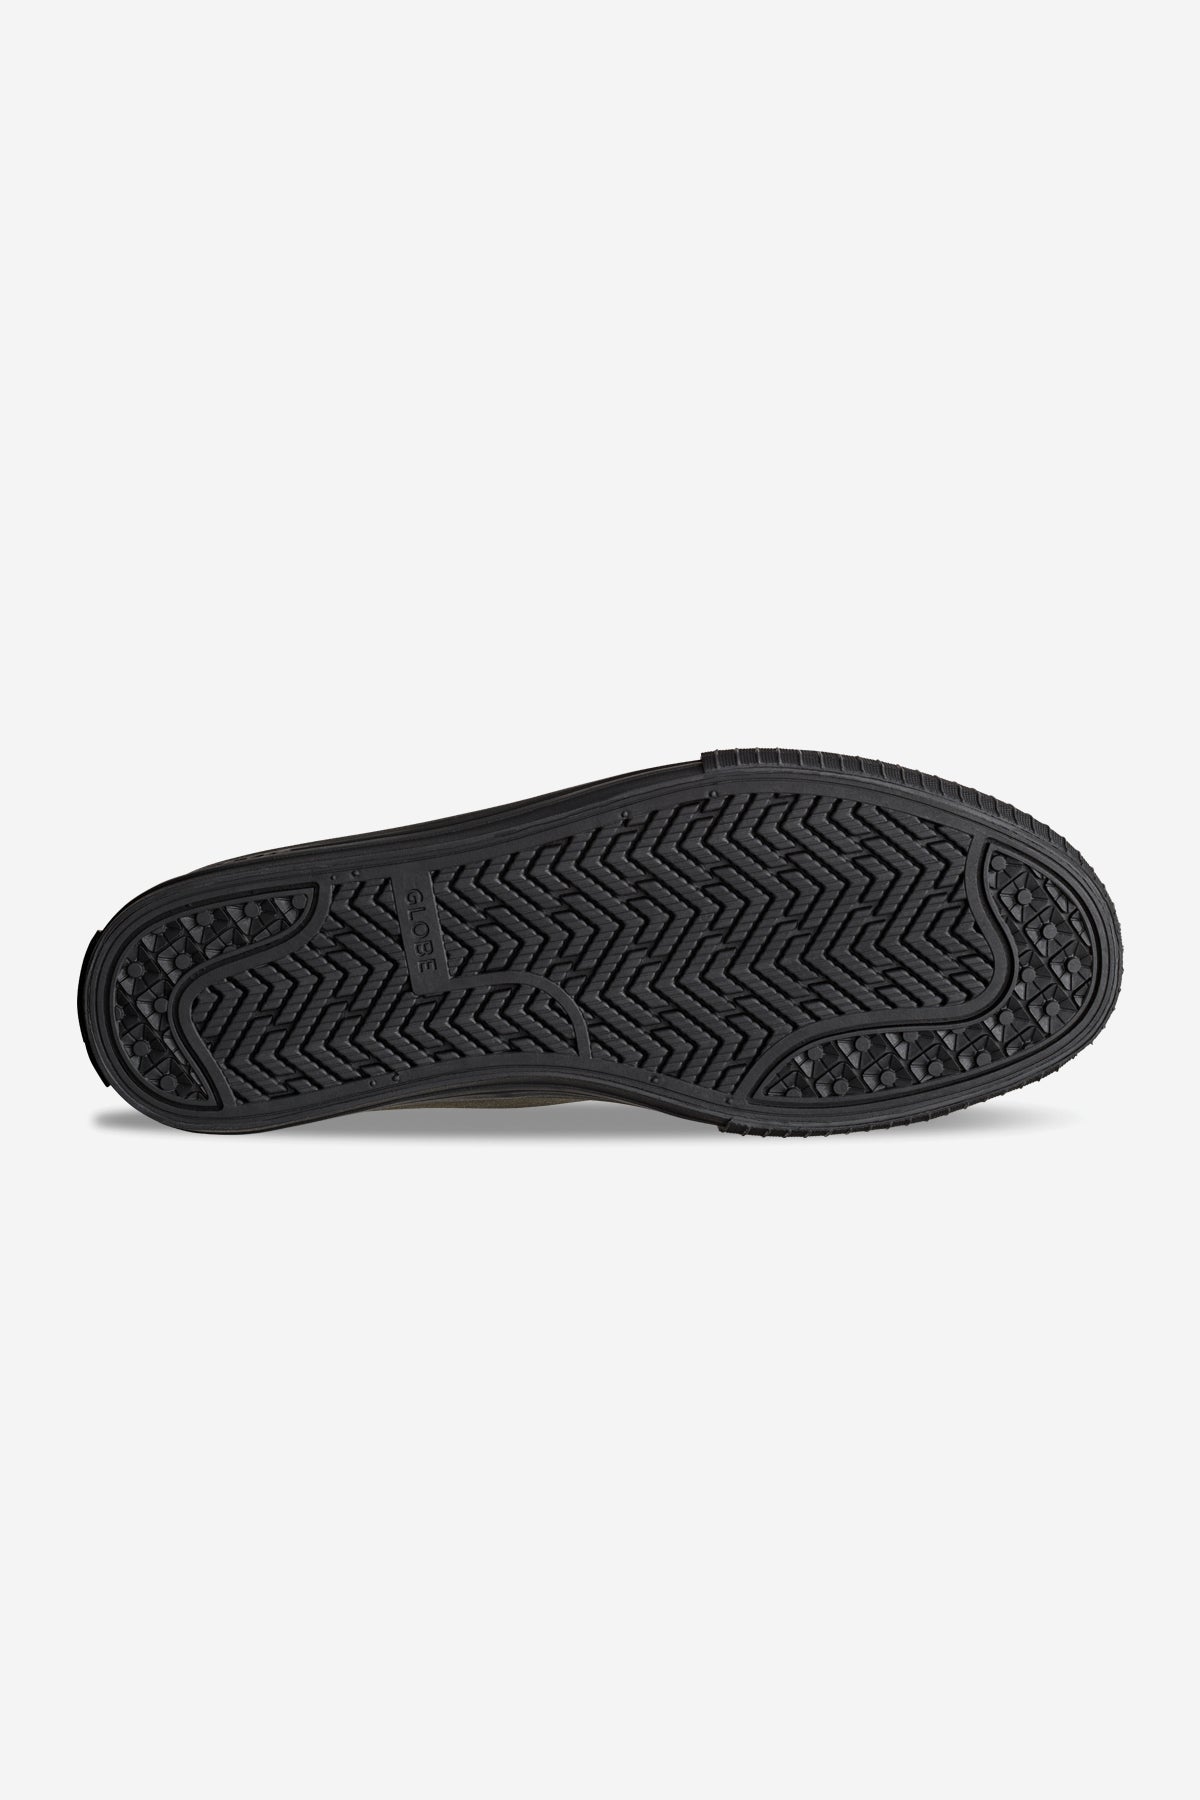 Globe - Gillette Mid - Noir Olive/Noir - skateboard Chaussures